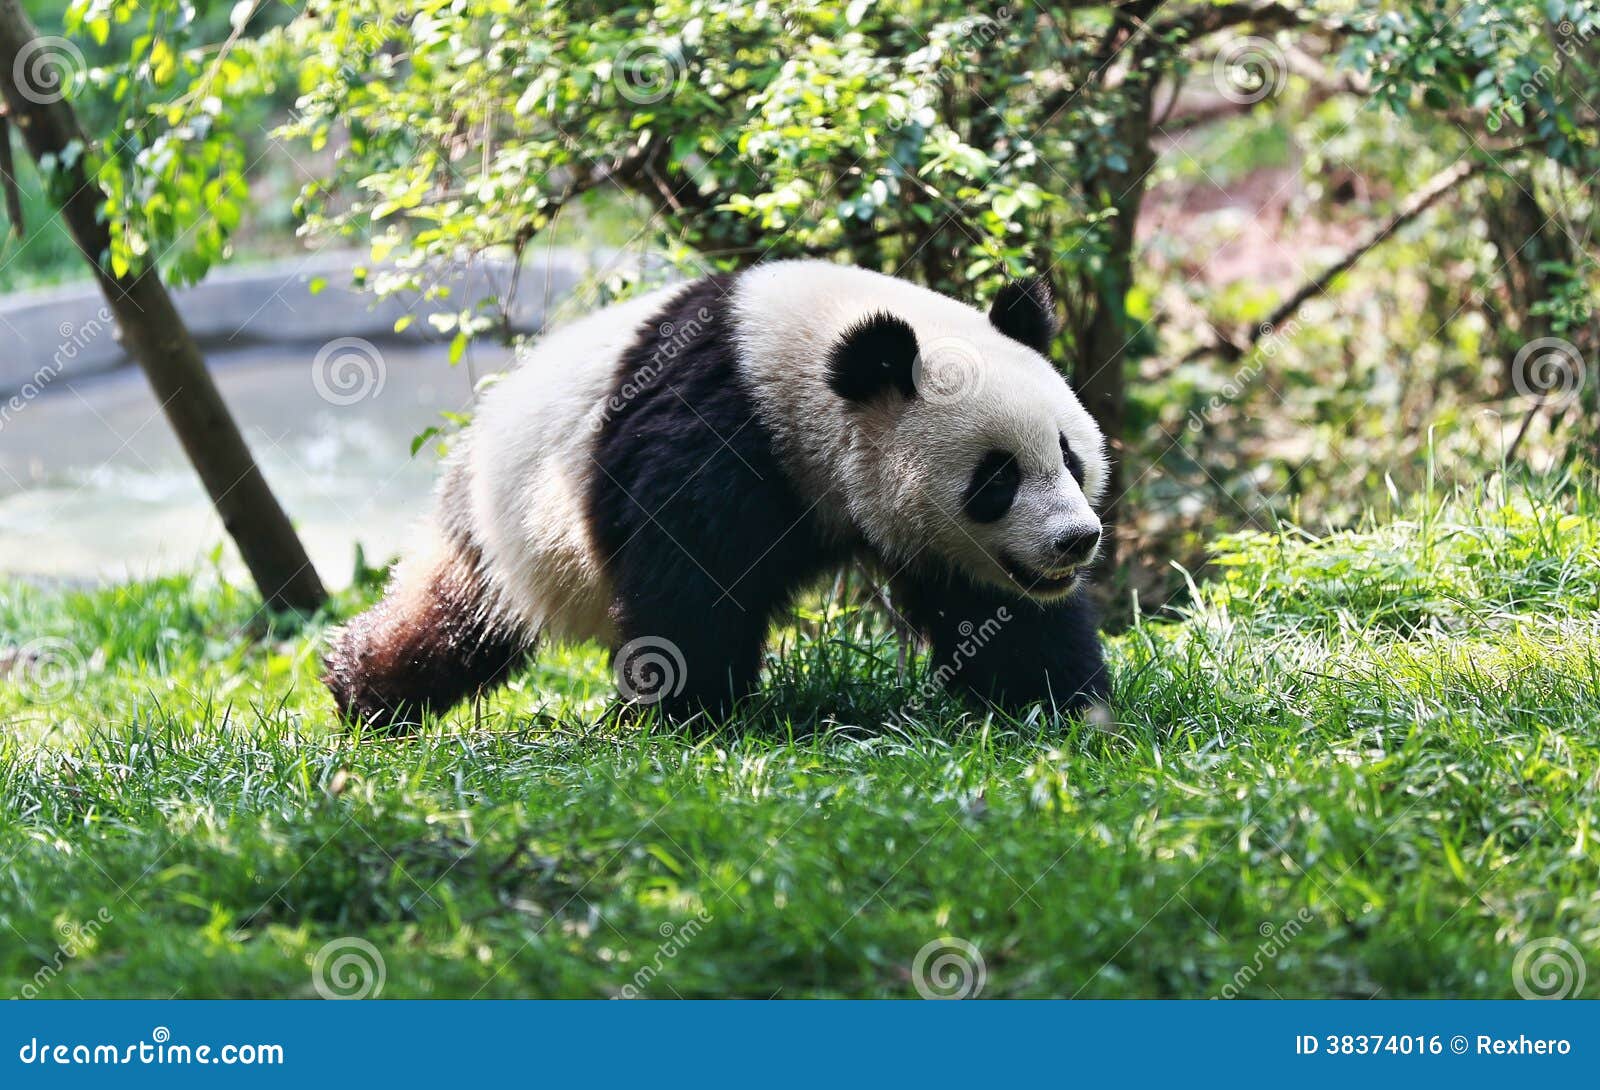 Panda running stock photo. Image of small, cute, bamboo - 383740161300 x 903